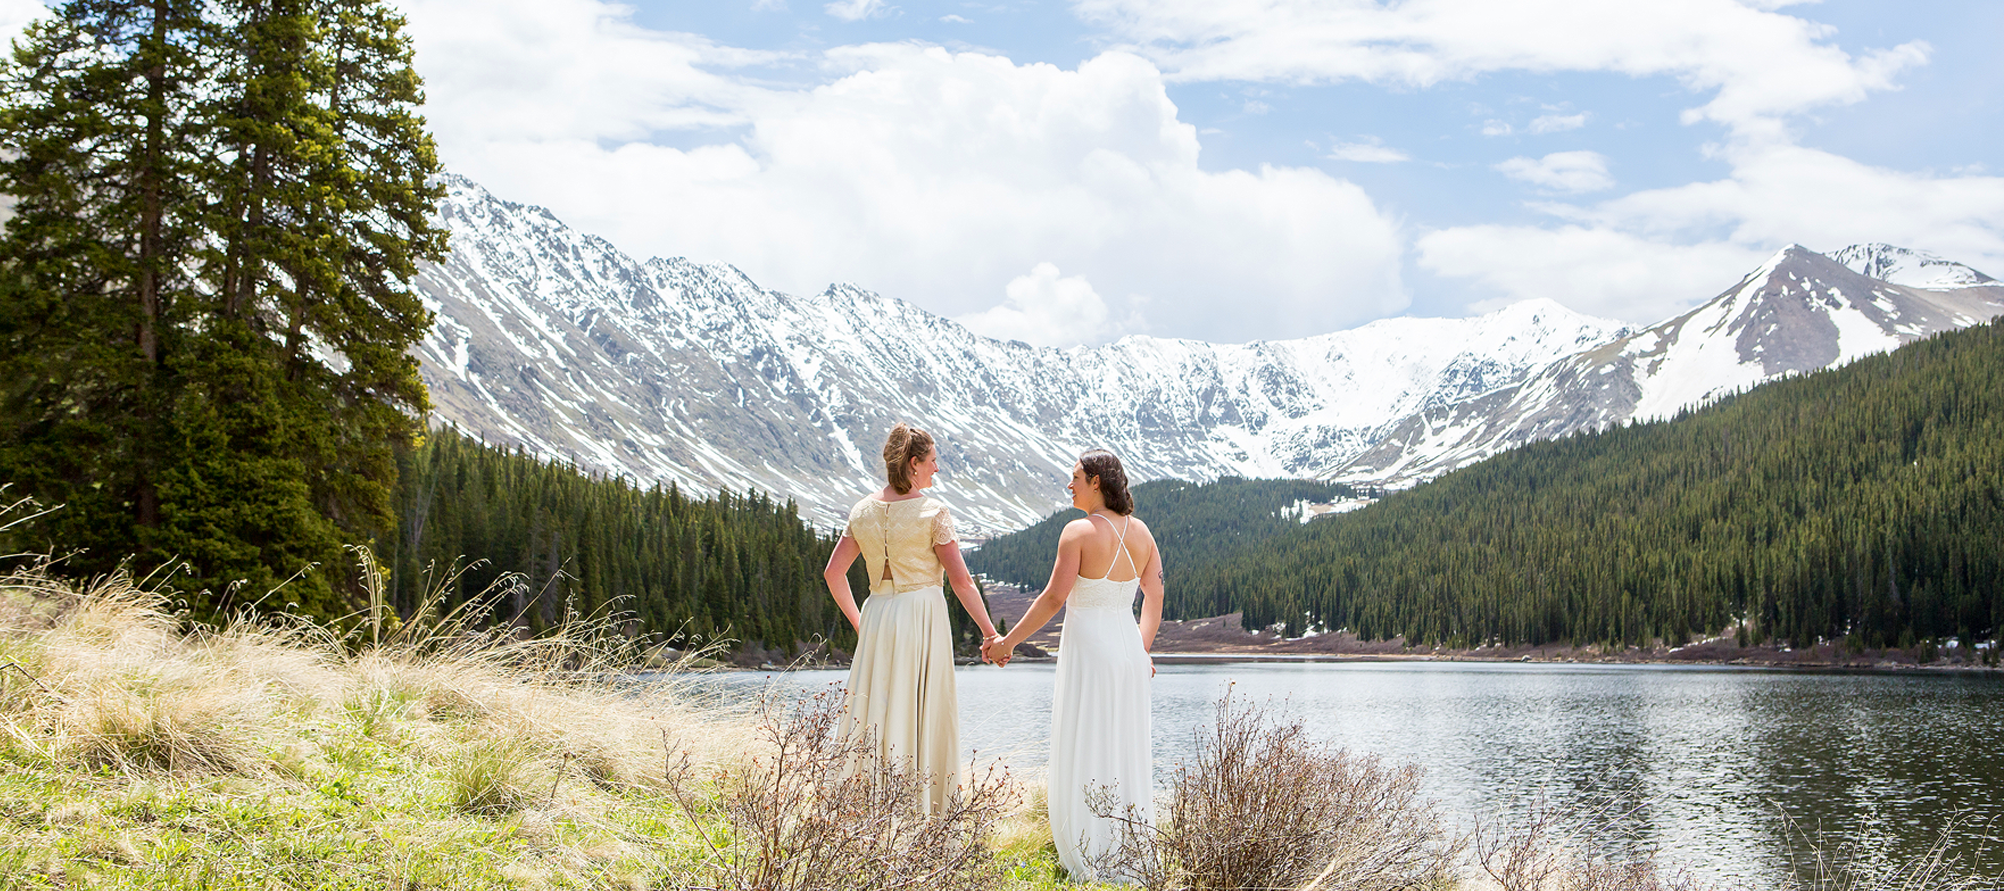 Colorado wedding photographer with same sex couple in the mountains.